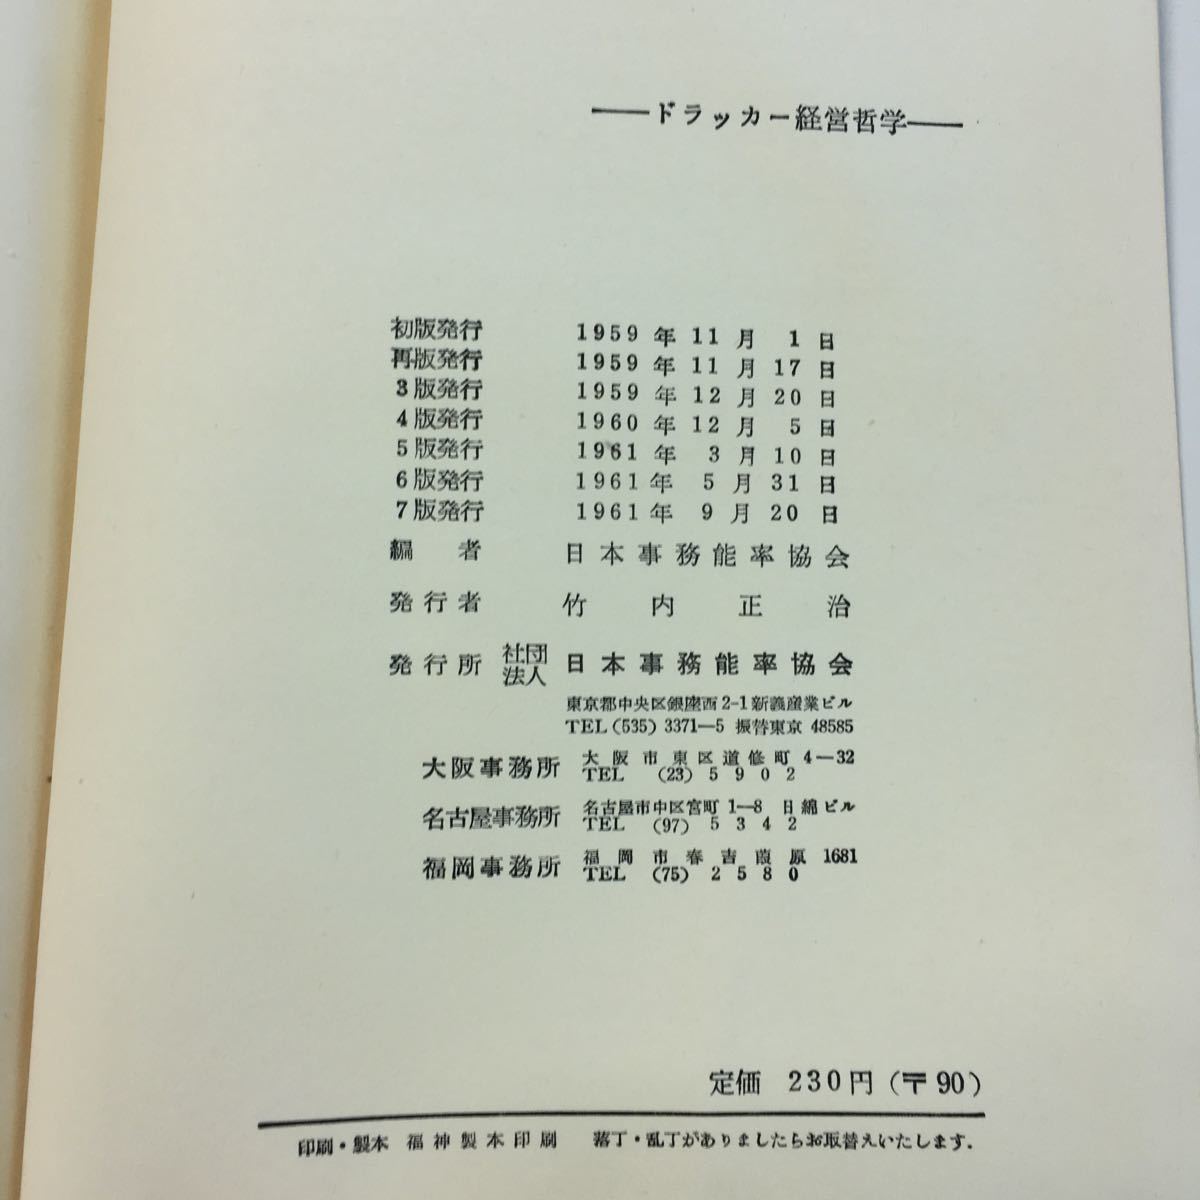 h-633 *0do Rucker management philosophy Noda one Hara .. Japan office work talent proportion association compilation 